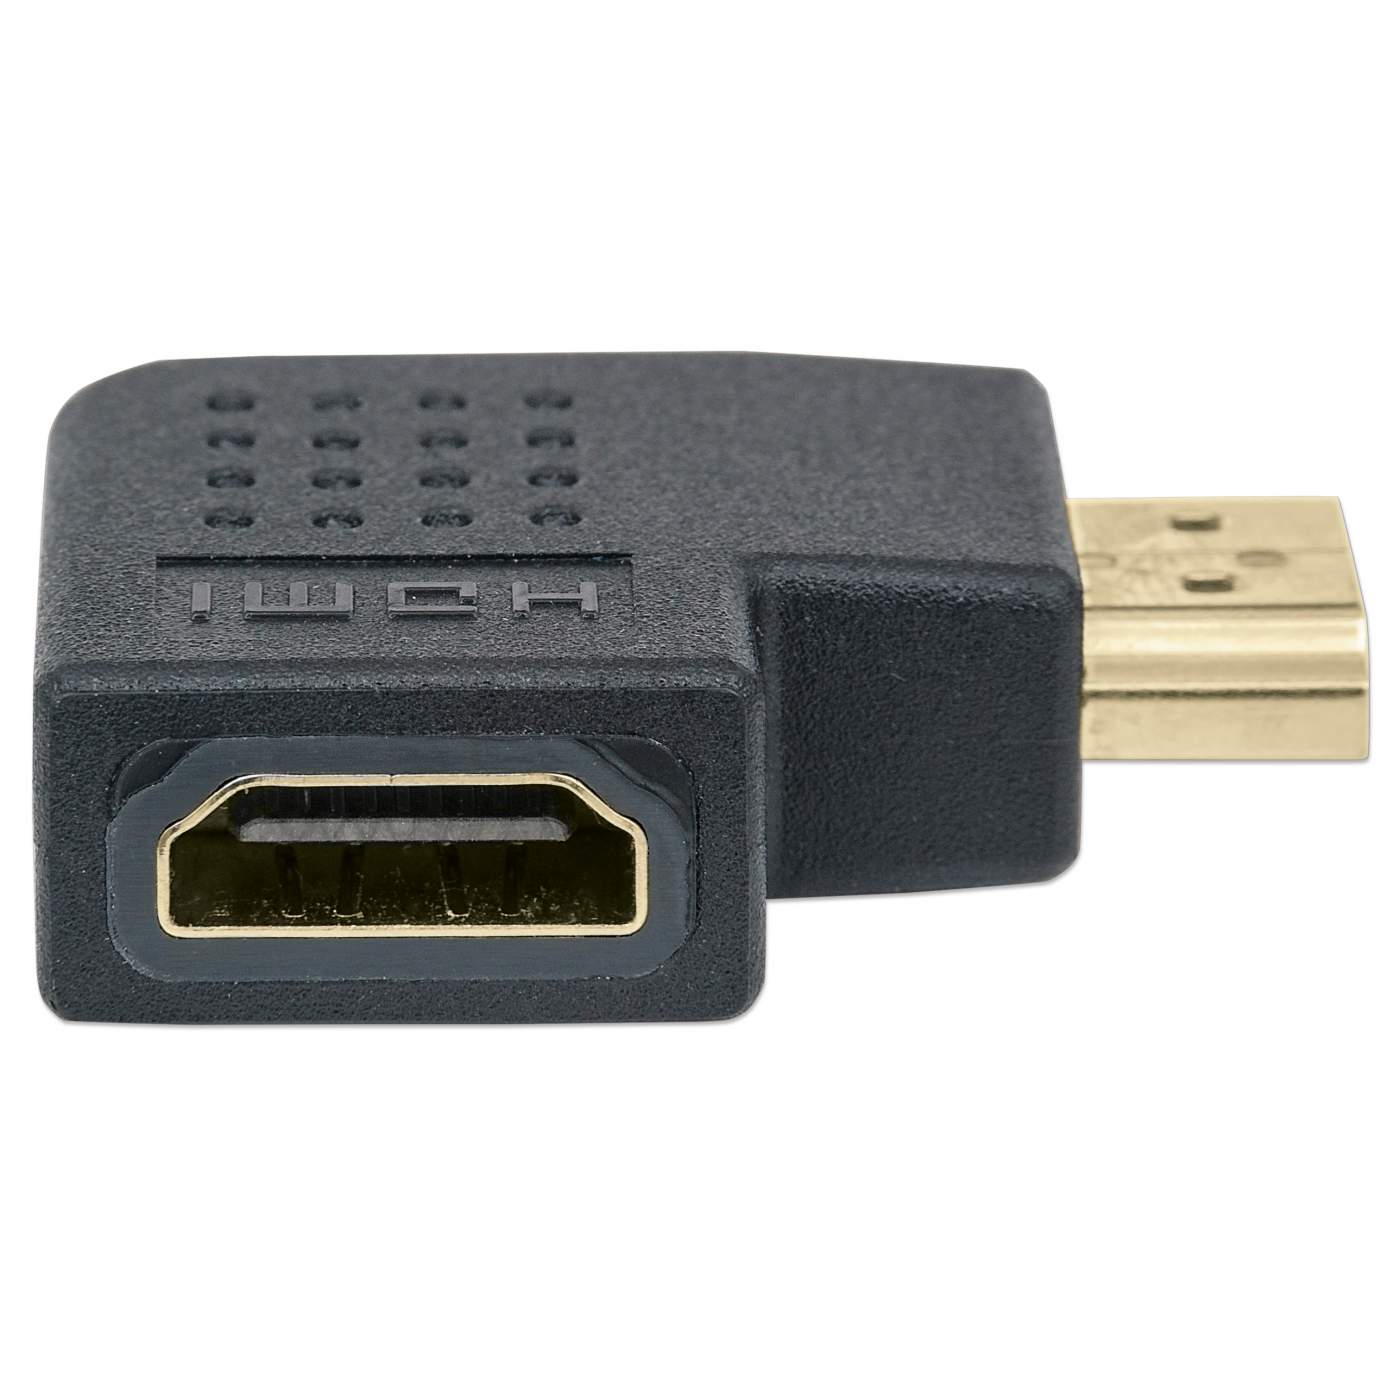 HDMI Adapter Image 6